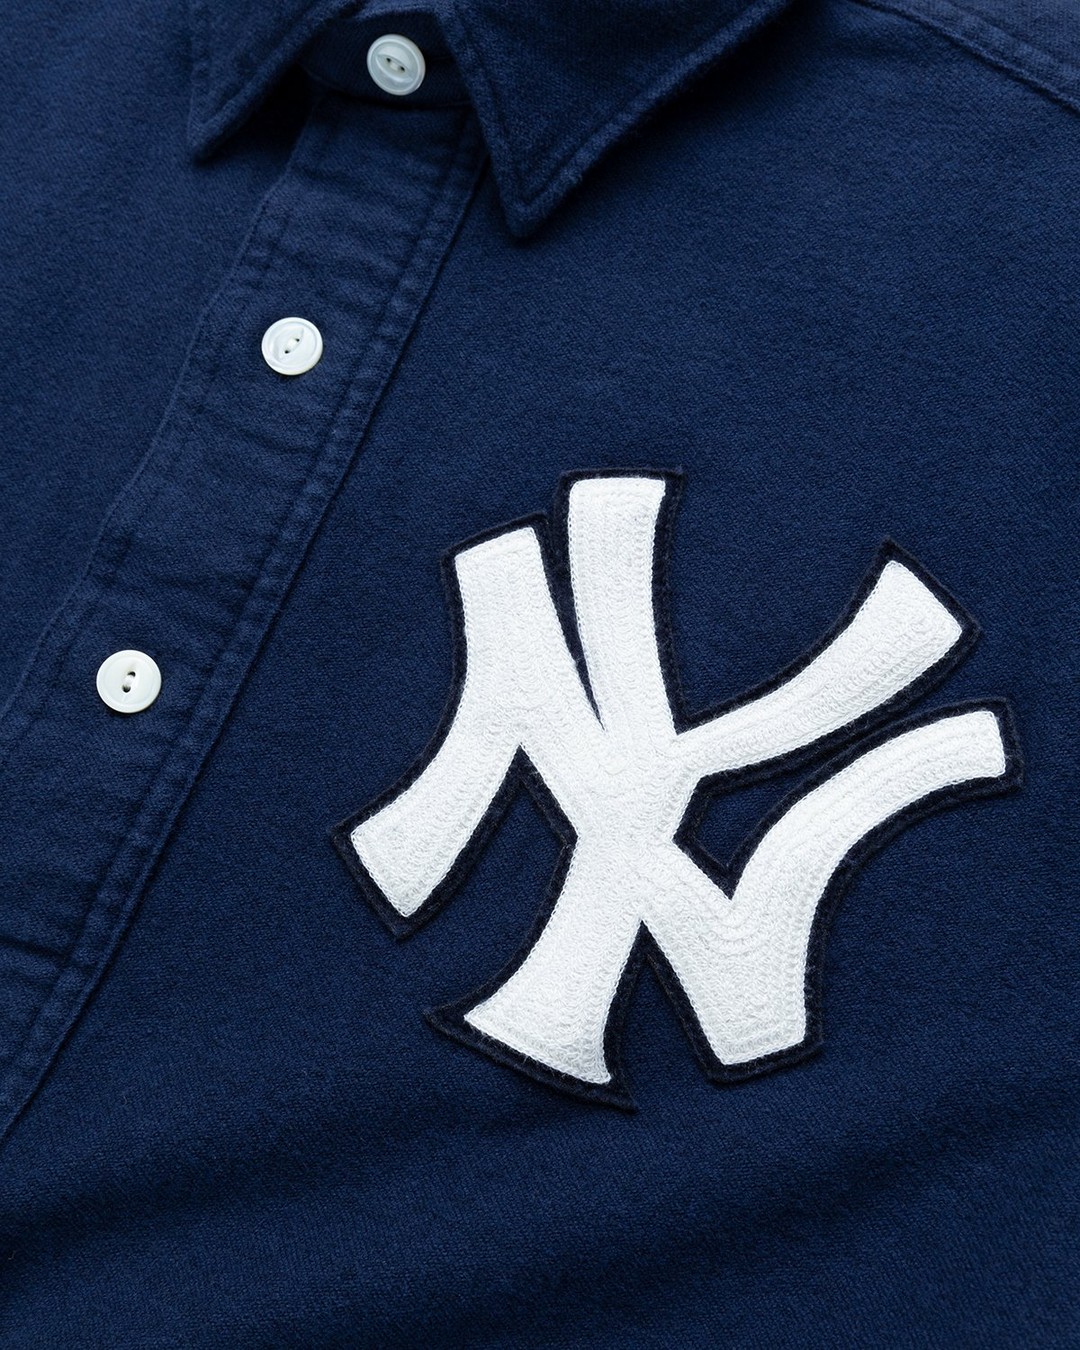  Yankees Polo